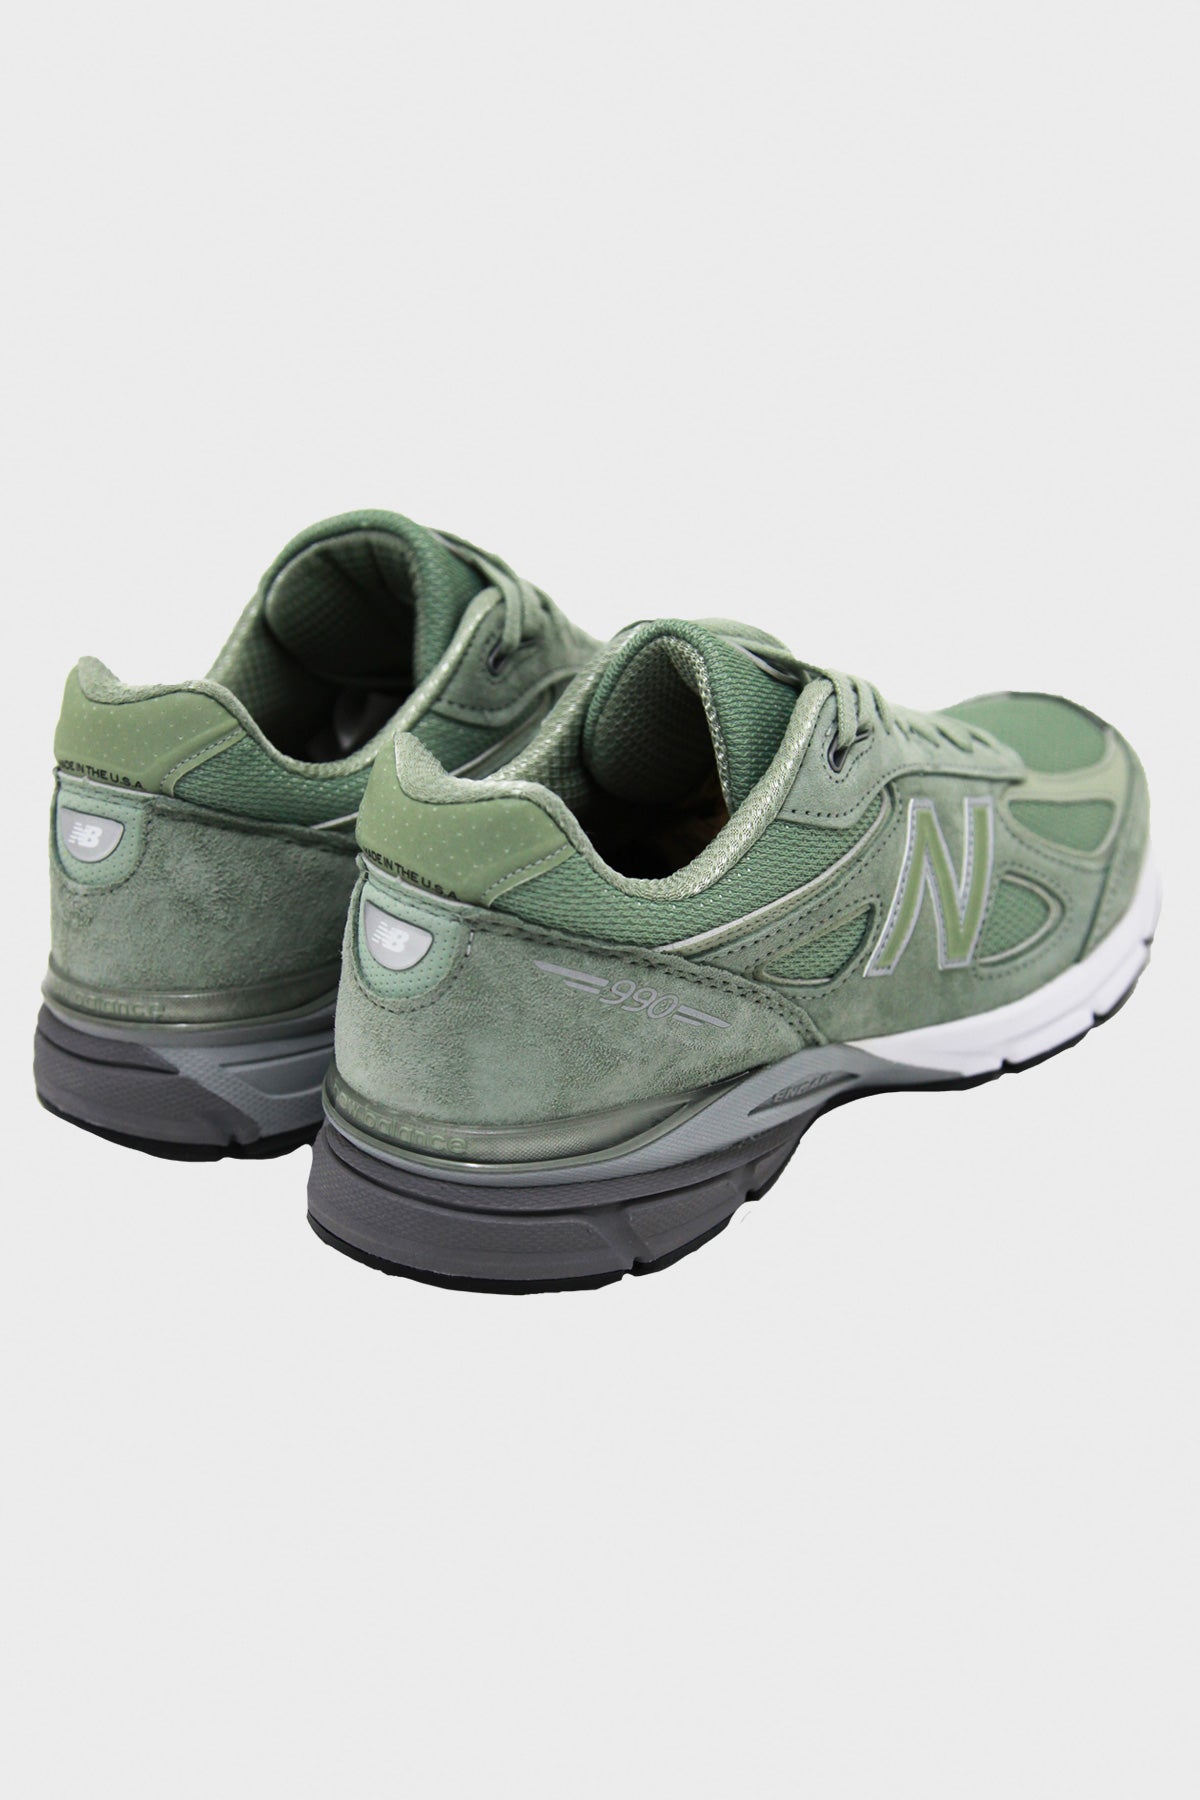 New Balance 990v4 Shoes | Silver Mint 